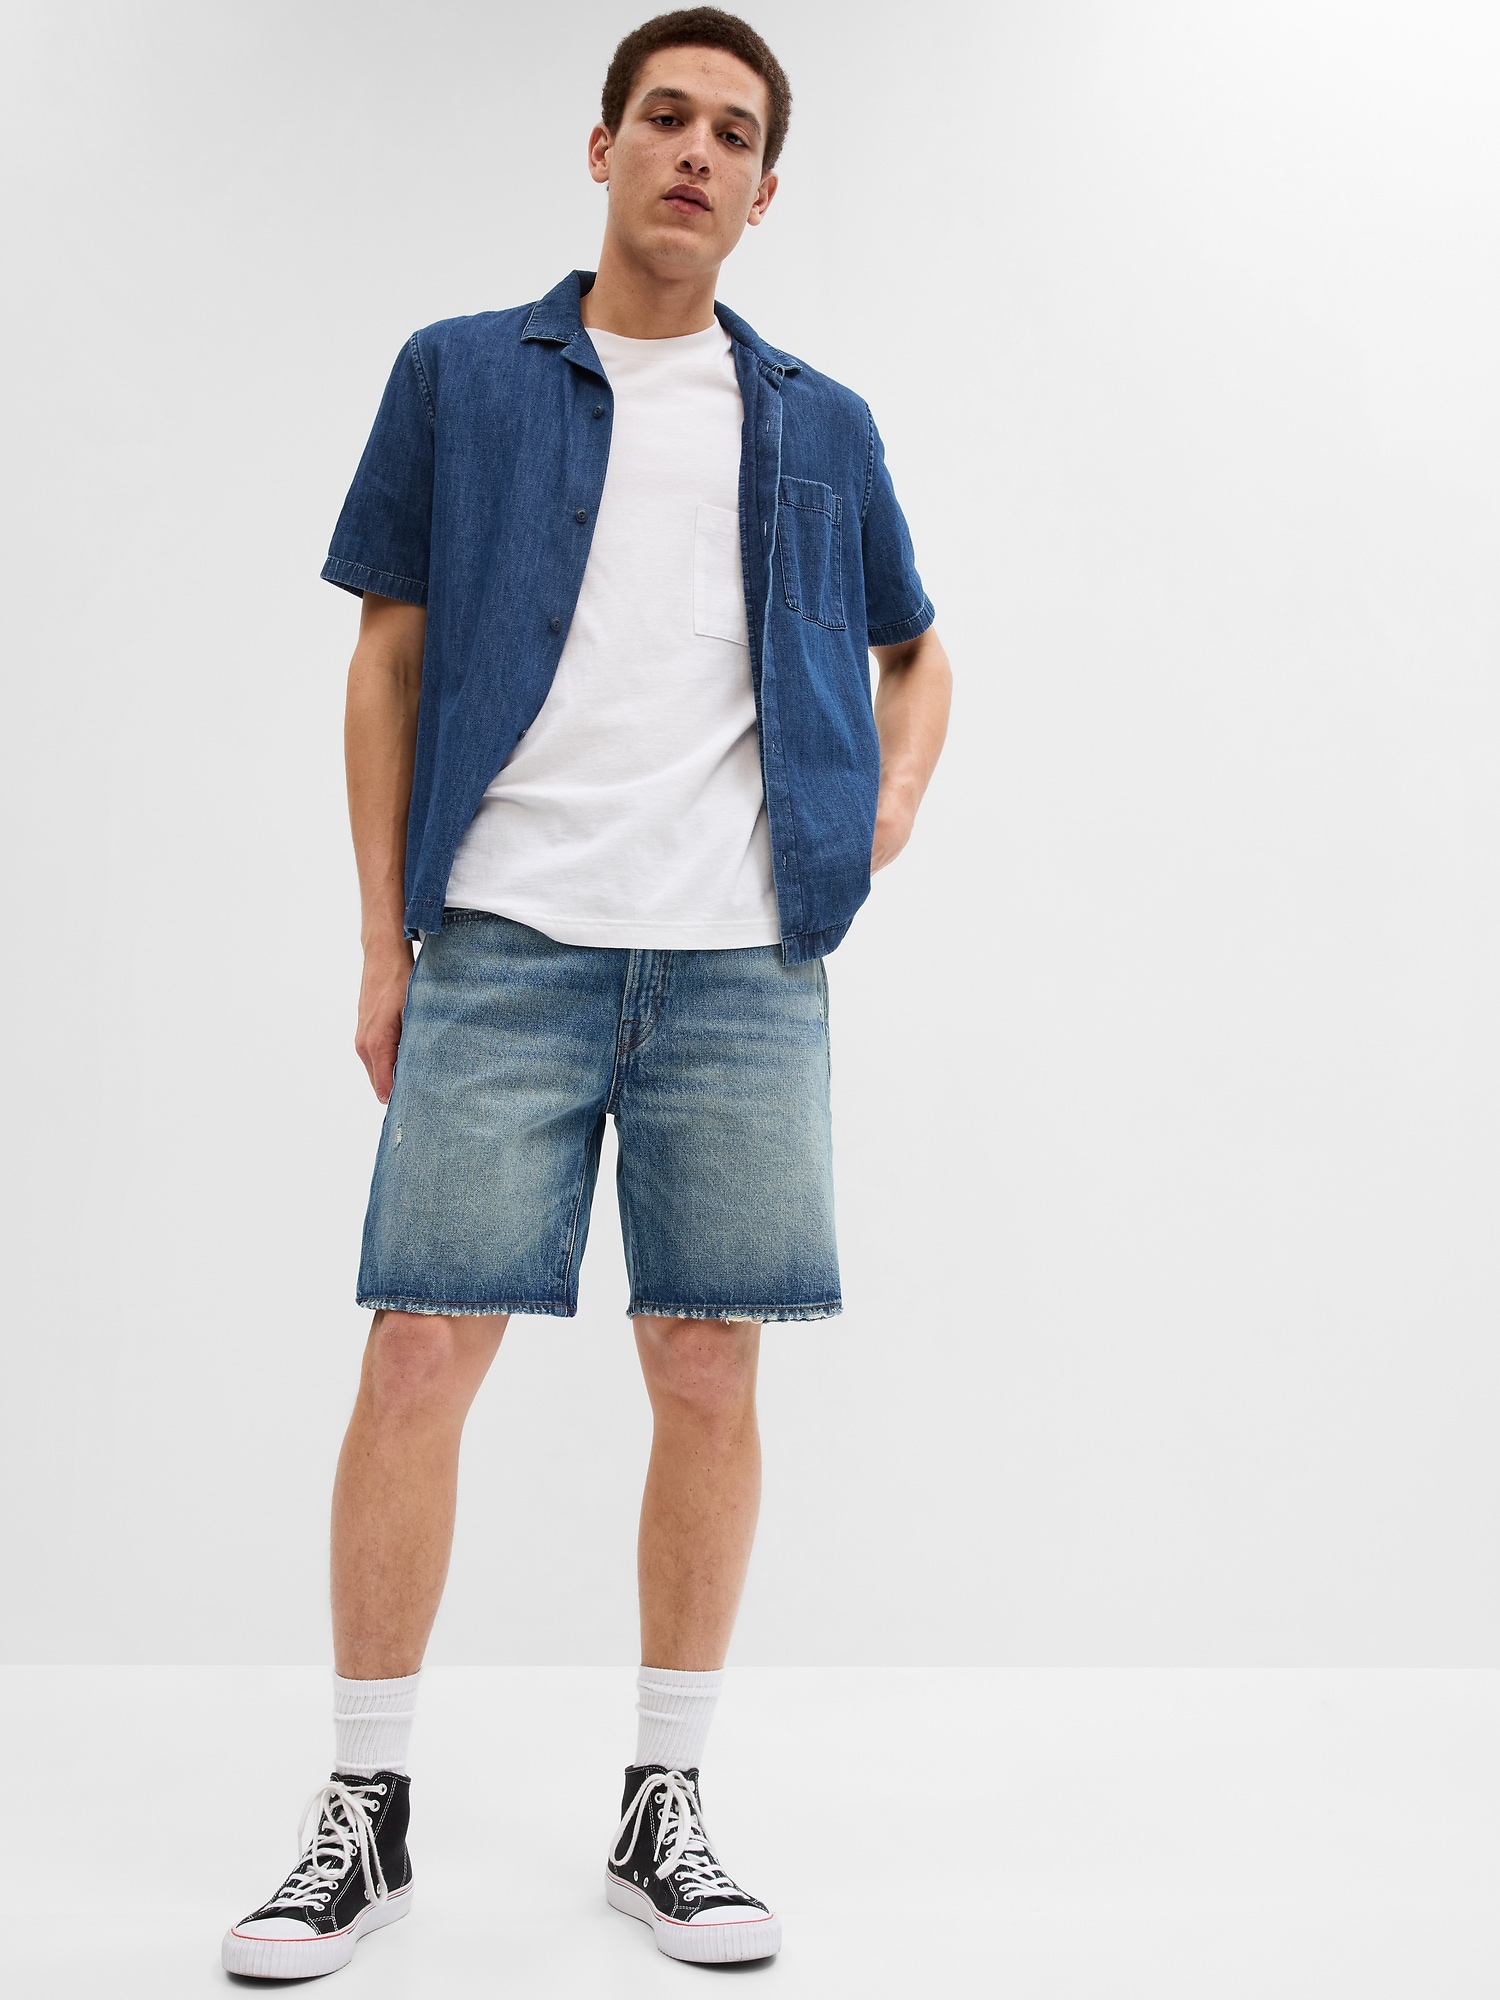 Men's 90s Loose Denim Shorts by Gap Medium Wash Size 38W